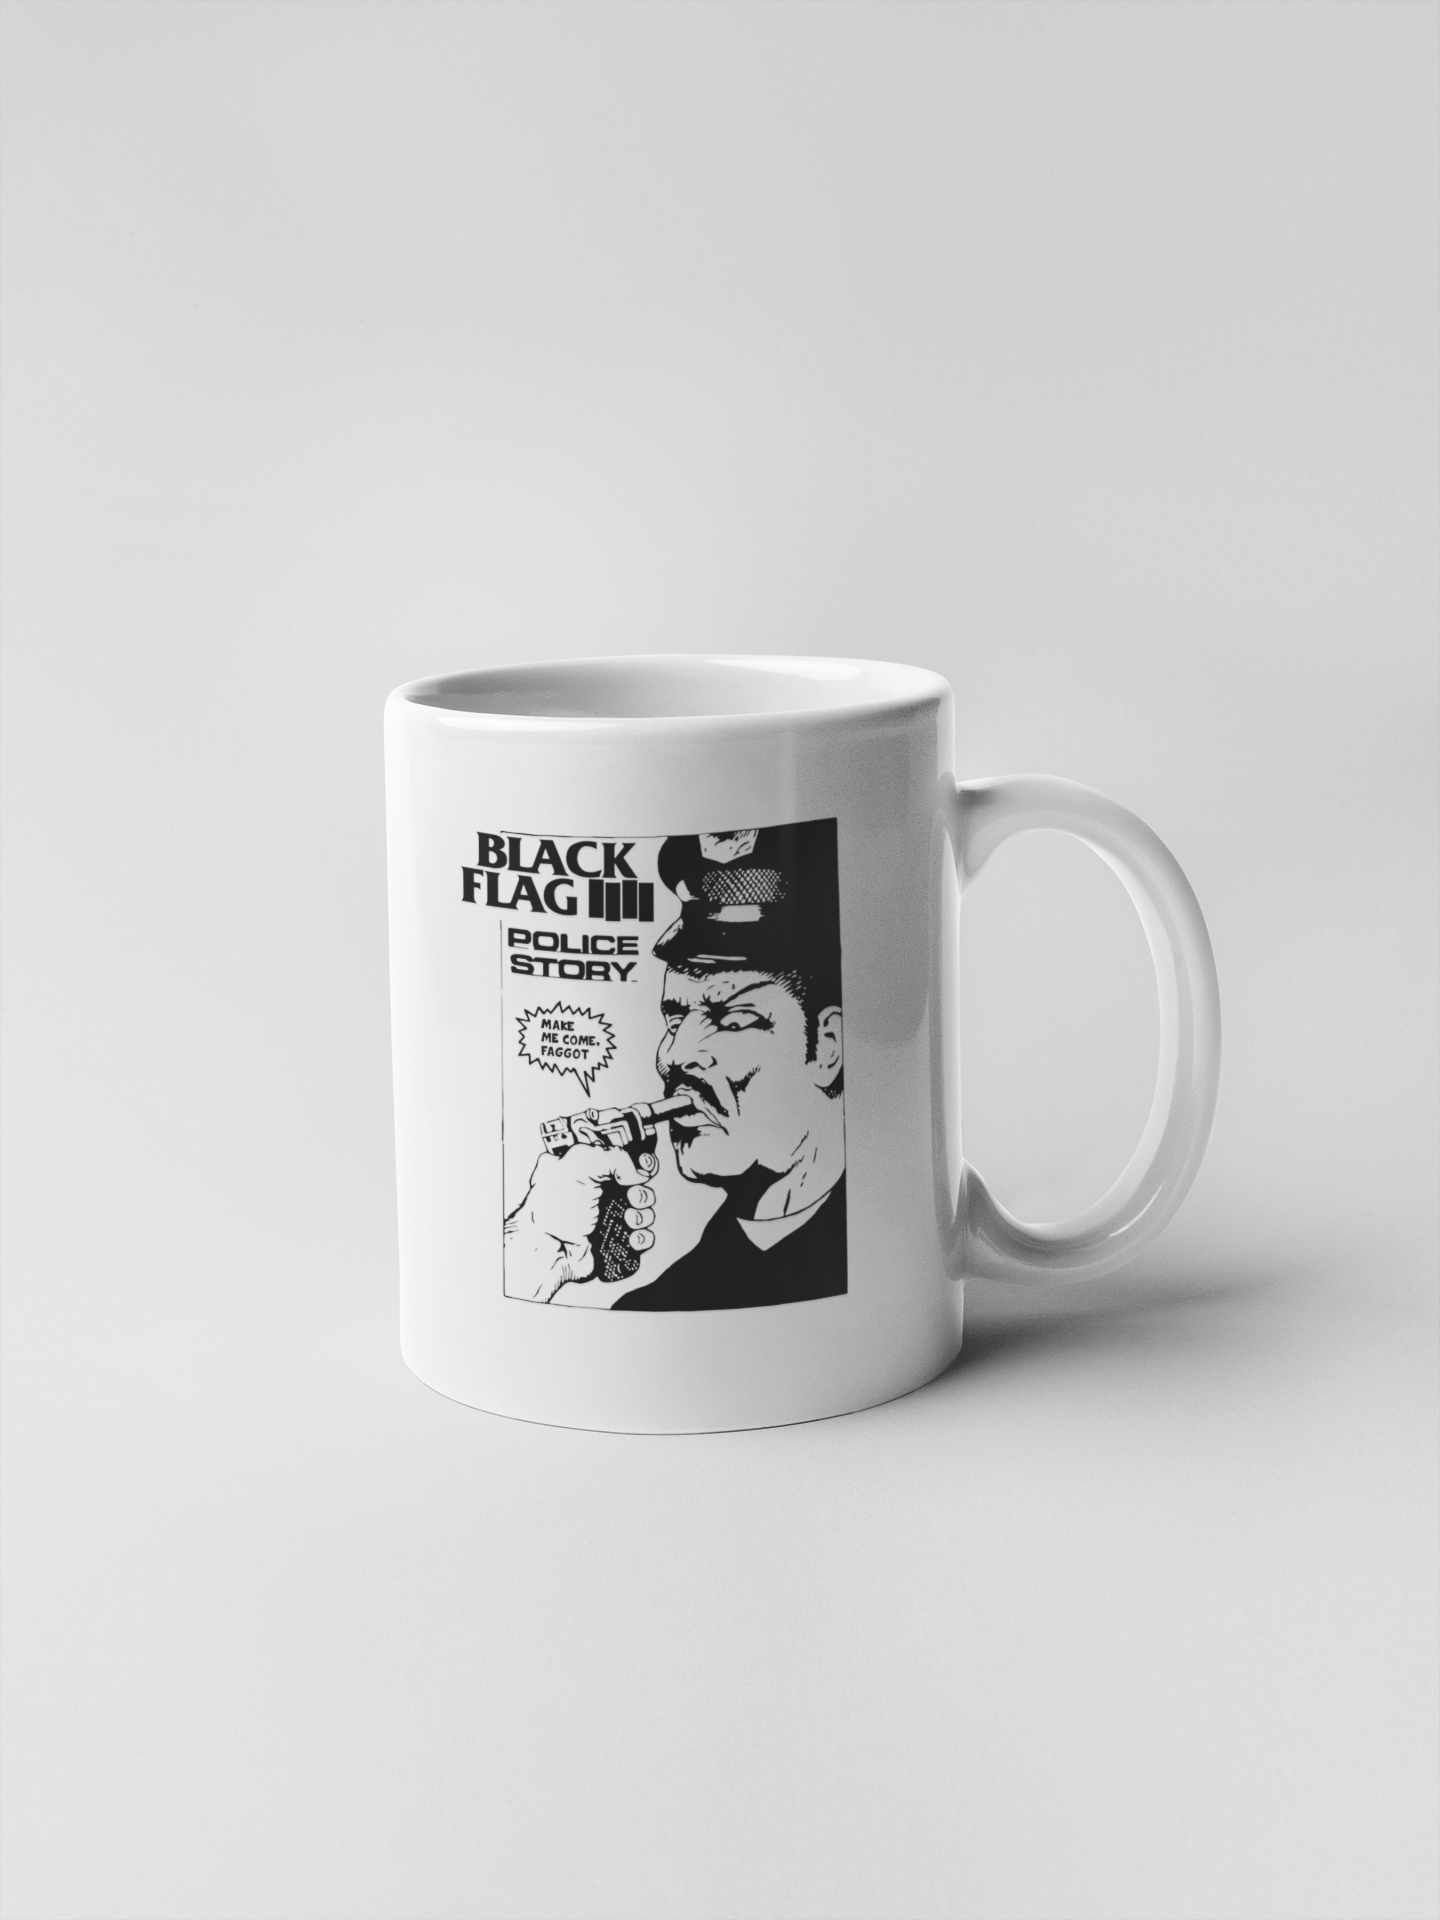 Black Flag Police Story Ceramic Coffee Mugs